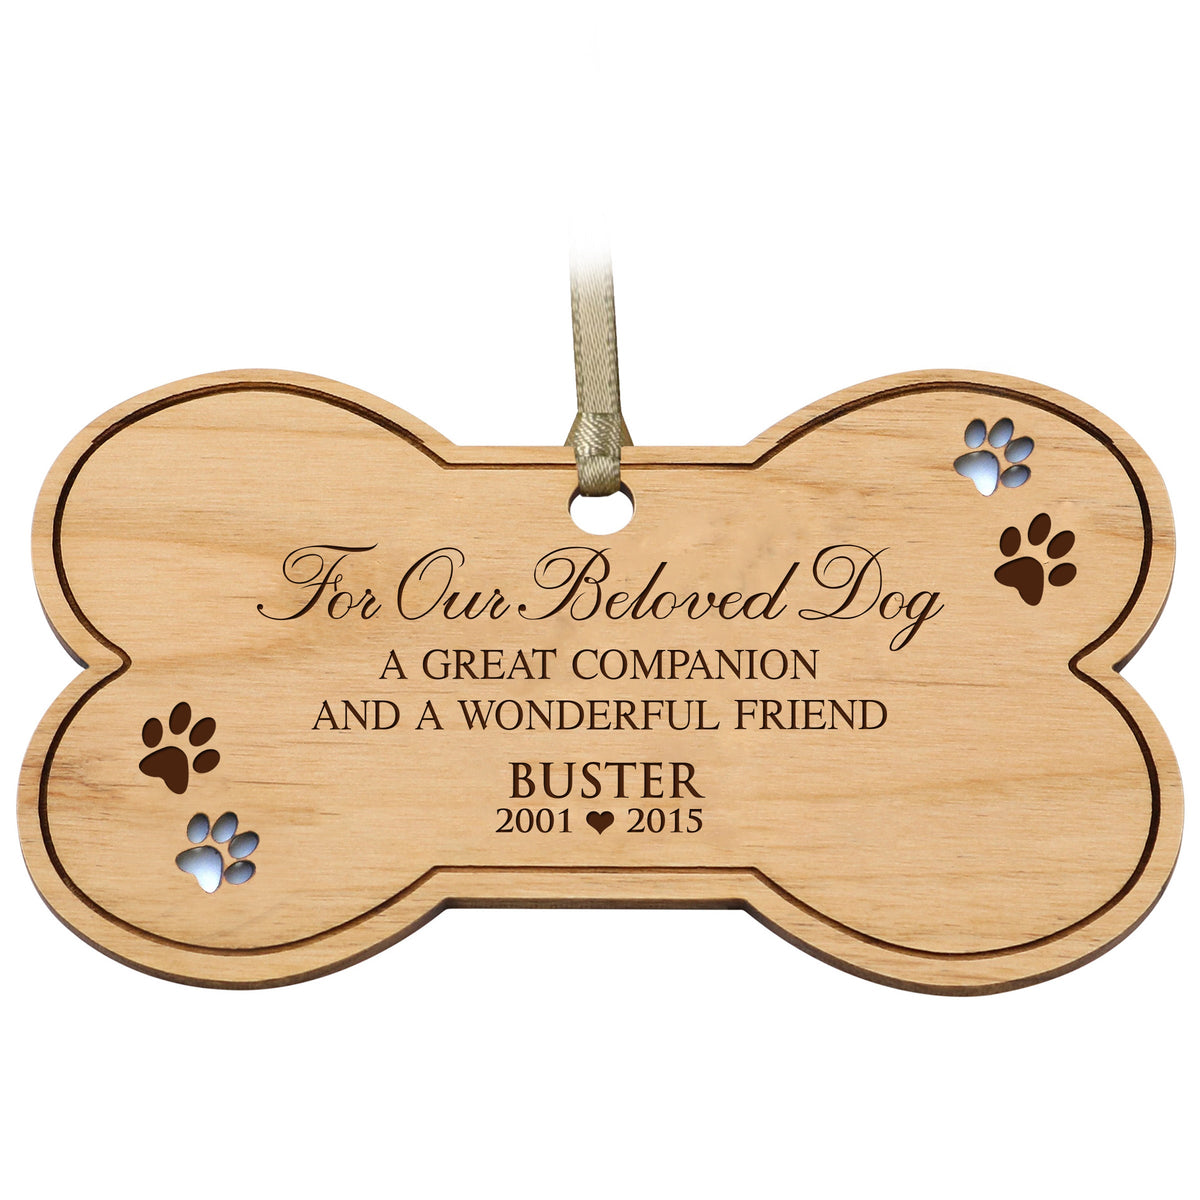 Wooden Pet Memorial Dog Bone Ornament with phrase &quot;A Great Companion&quot;